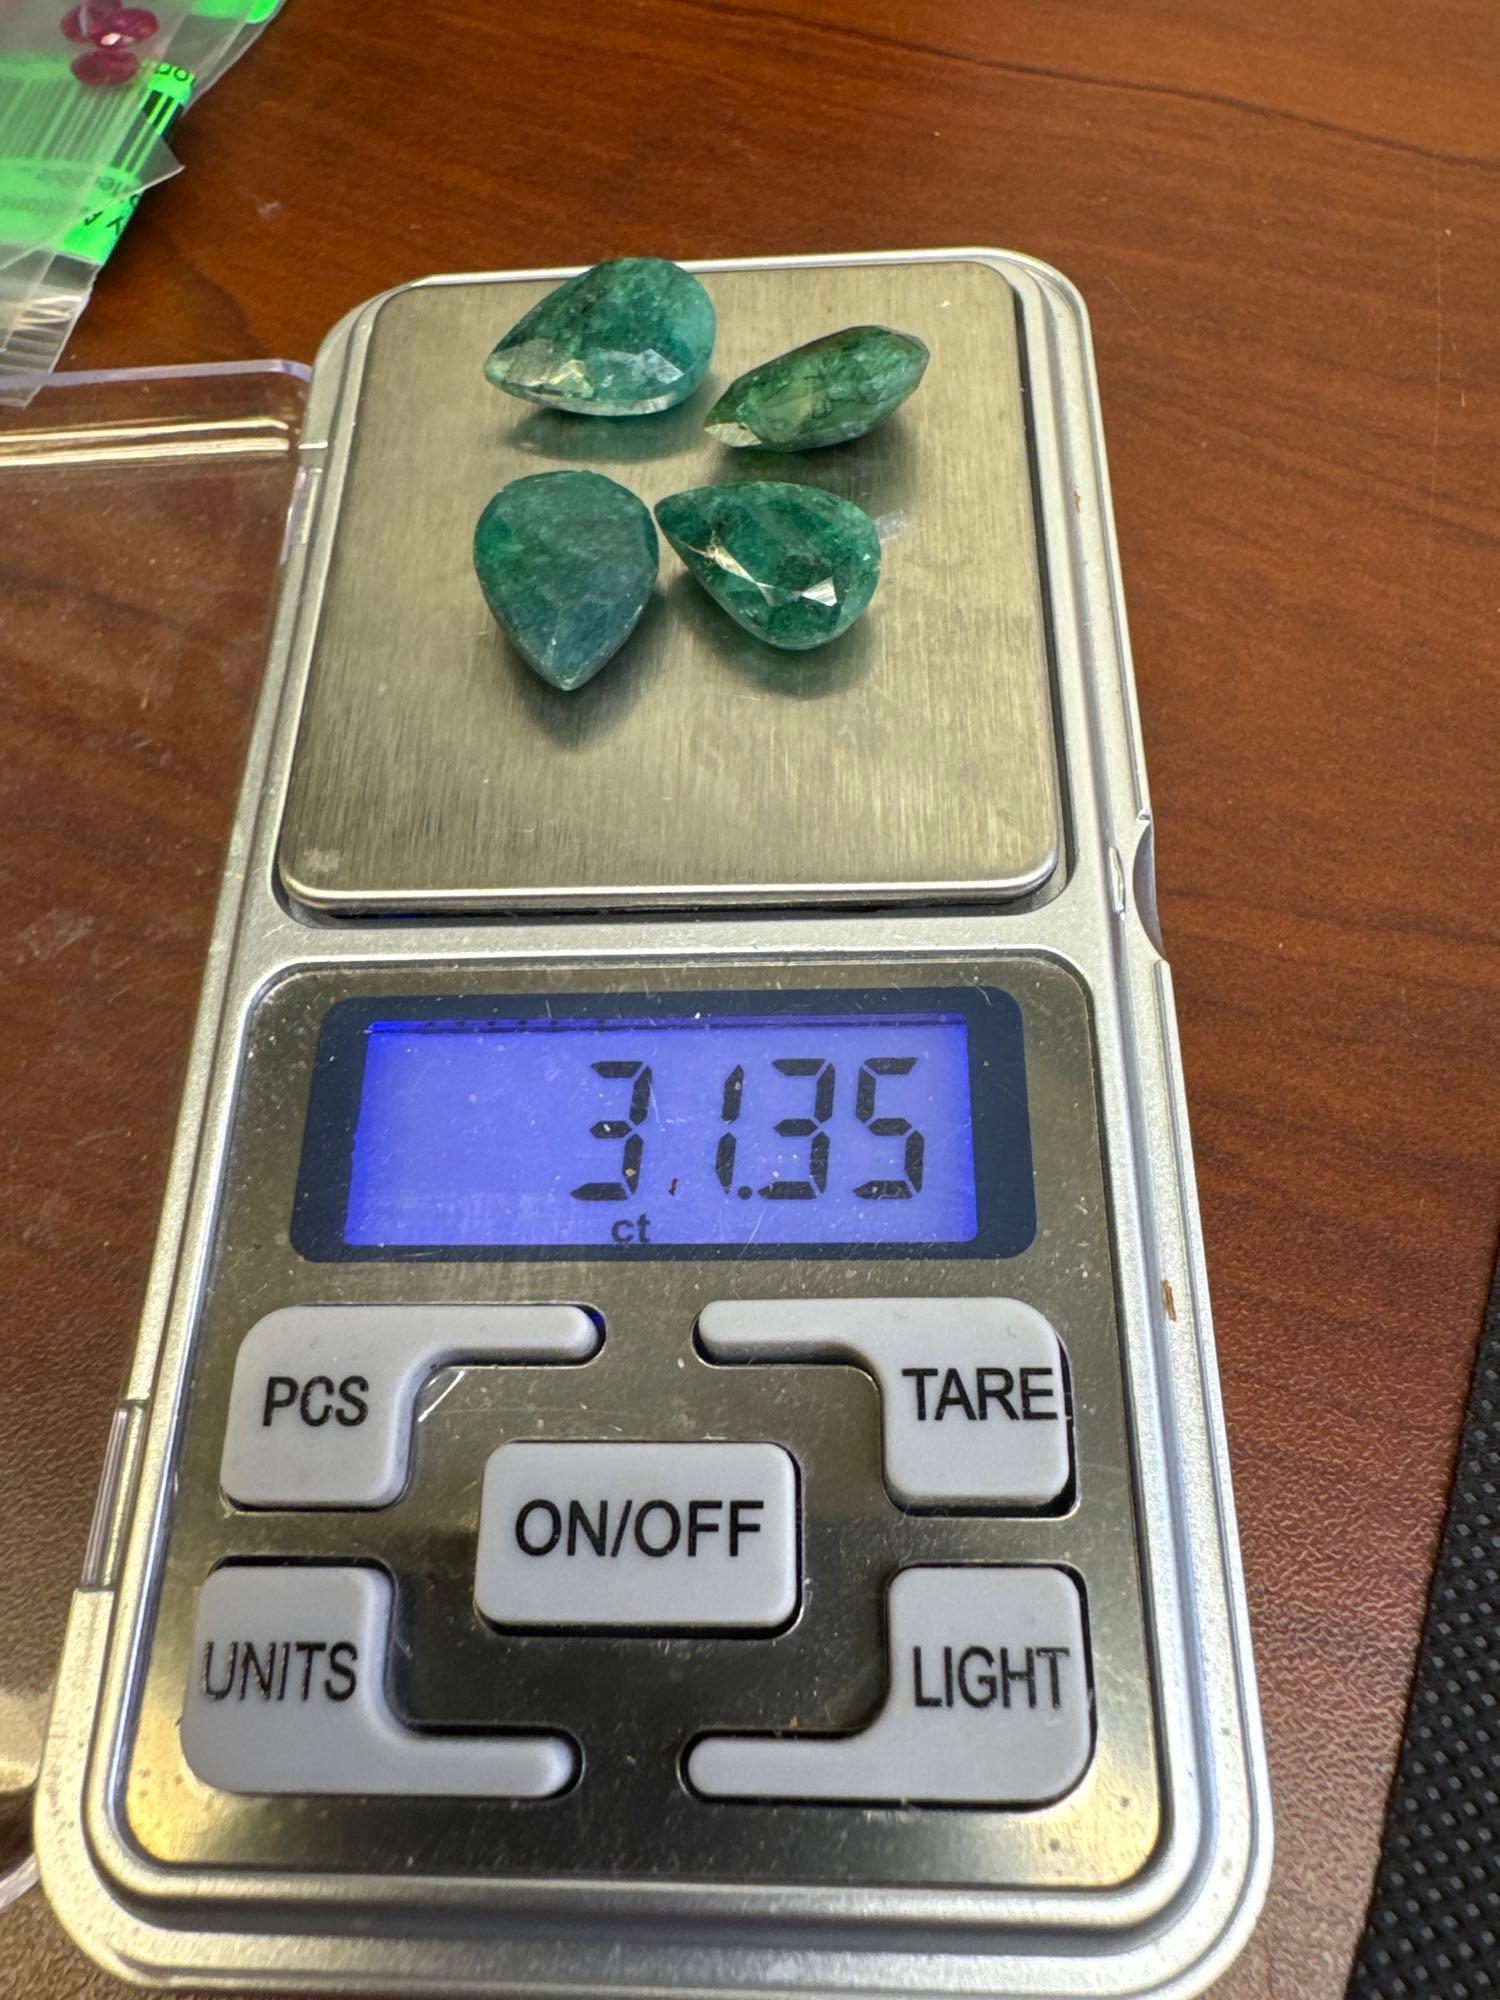 4x Green Pair Cut Emerald Gemstone 31.35 Ct